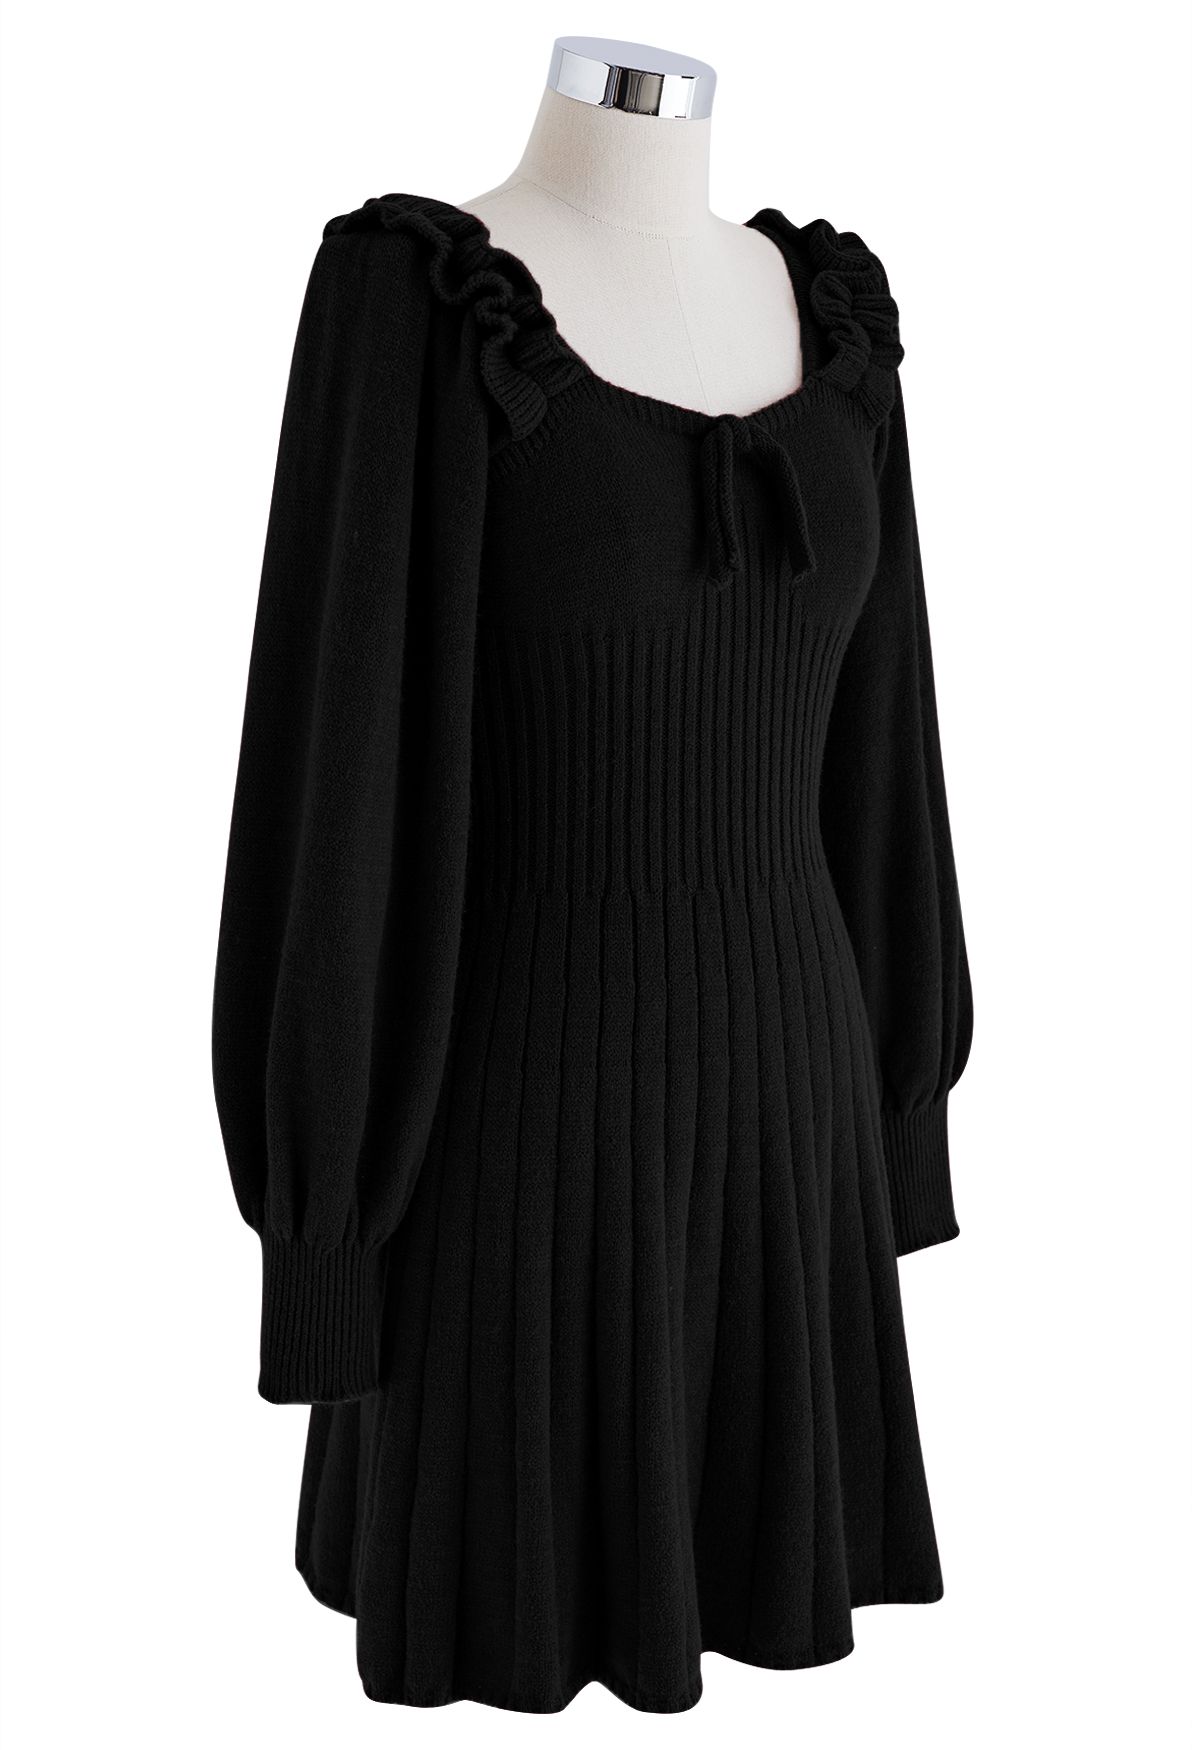 Tie-Bow Scoop Neck Knit Mini Dress in Black